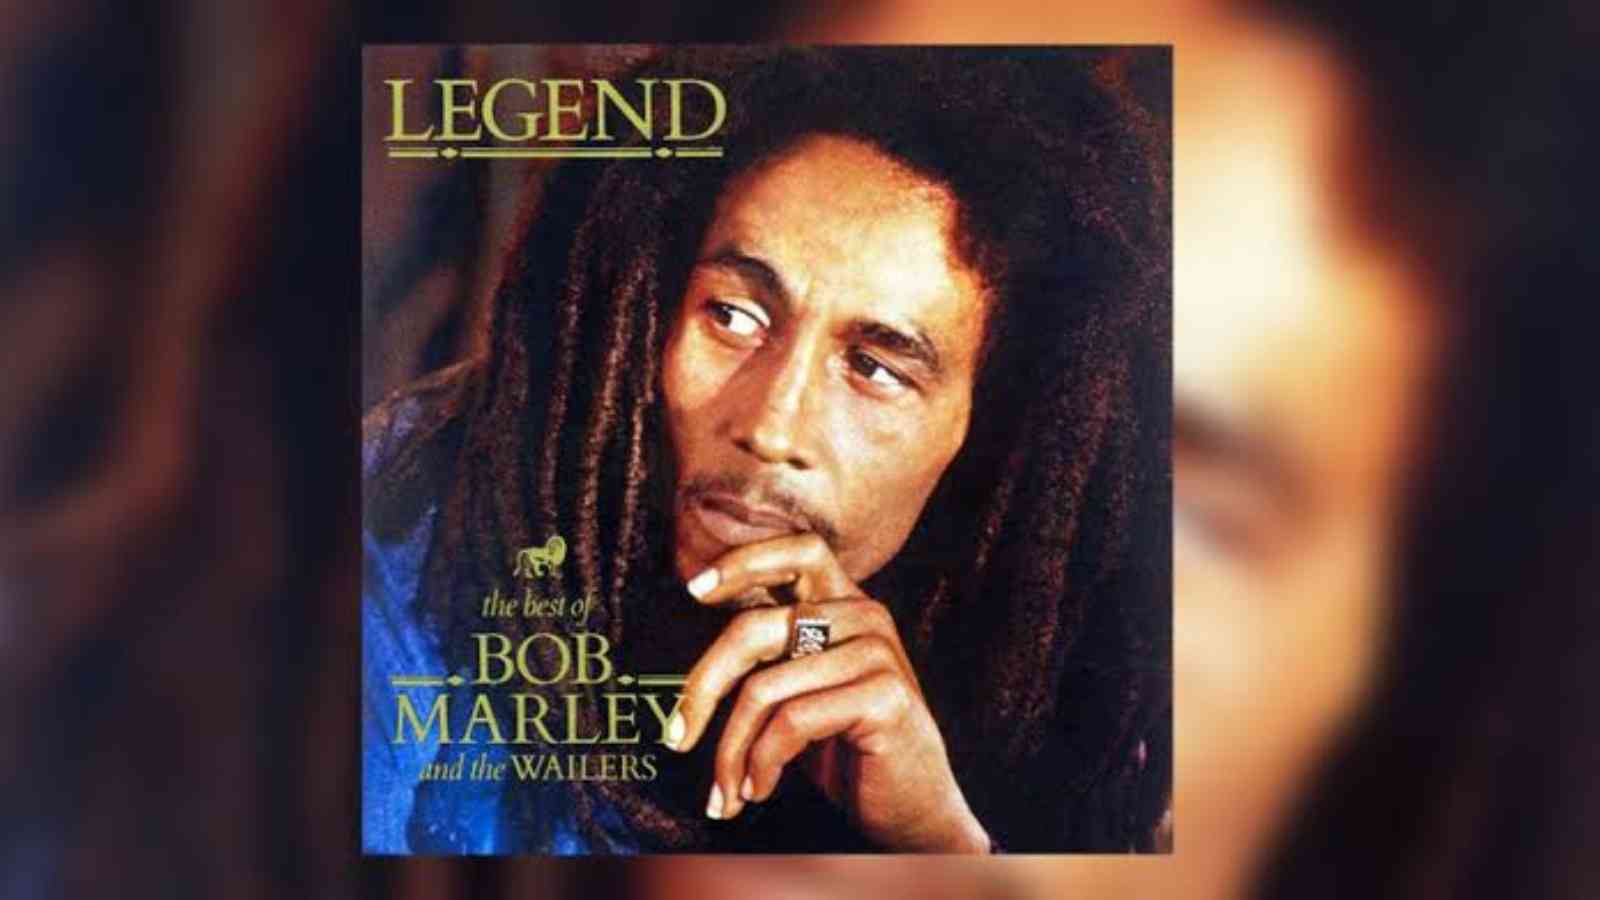 Bob Marley and The Wailers' Legend